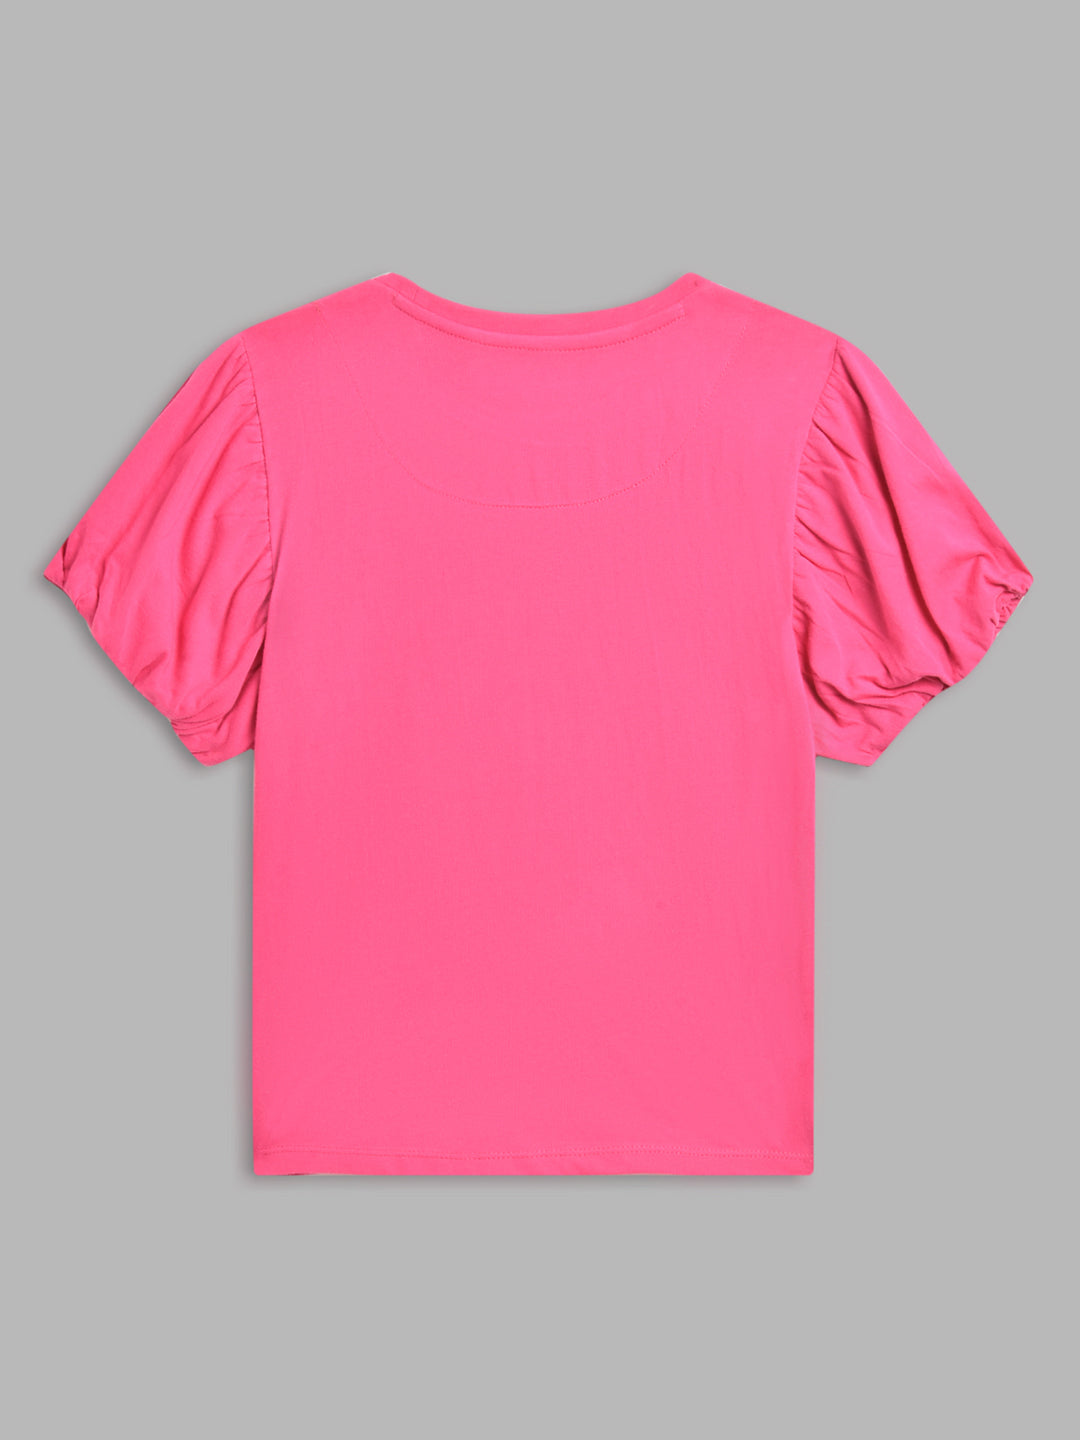 Blue Giraffe Kids Pink Printed Disney Princess Regular Fit T-Shirt